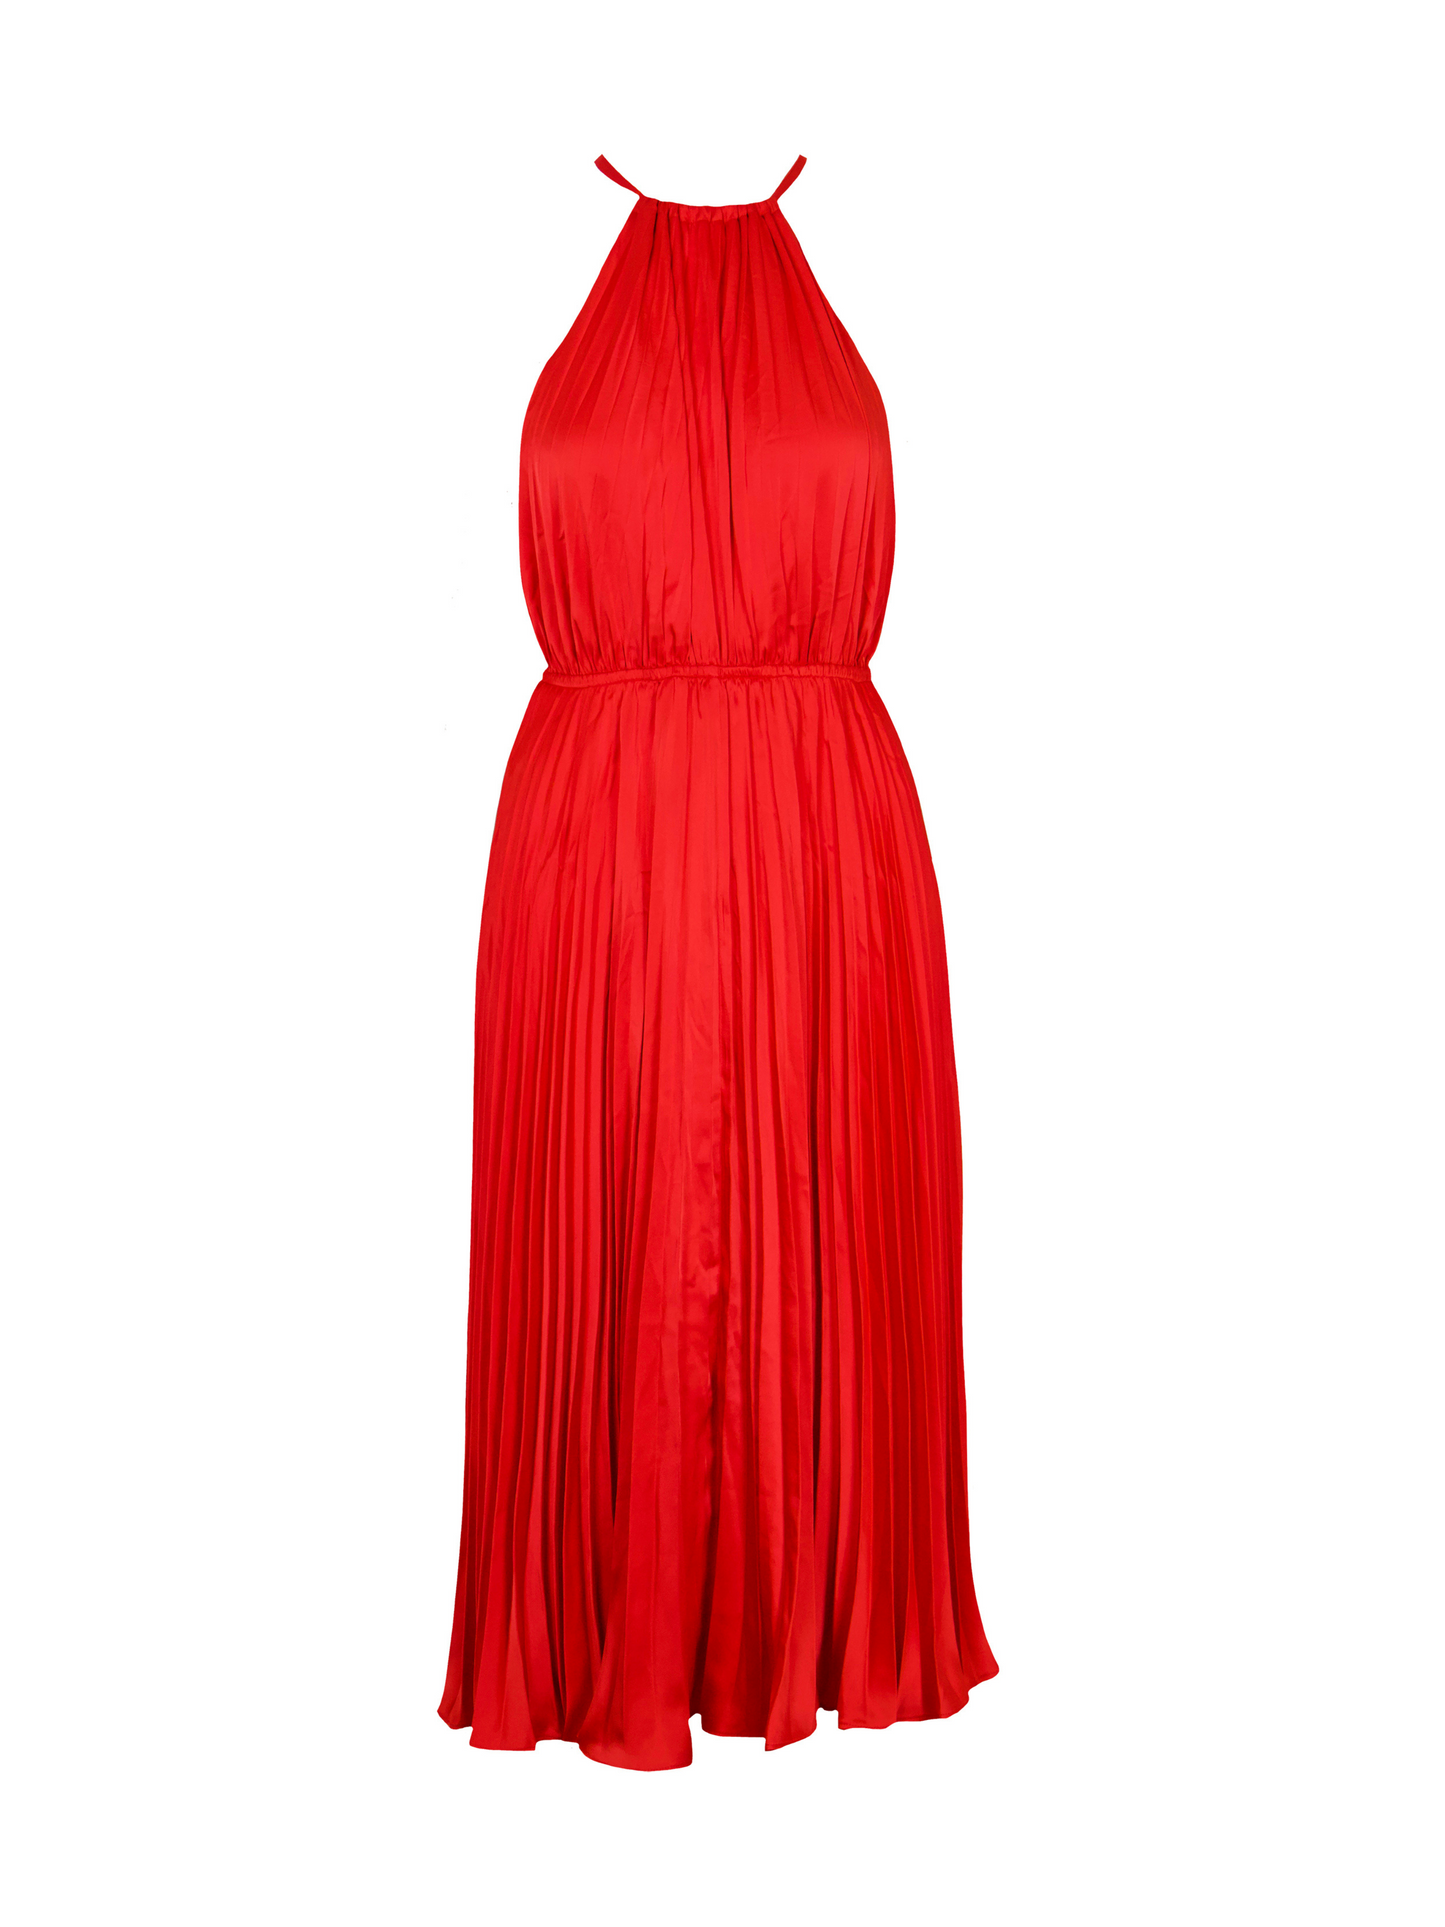 Kora Pleated Dress - FINAL SALE